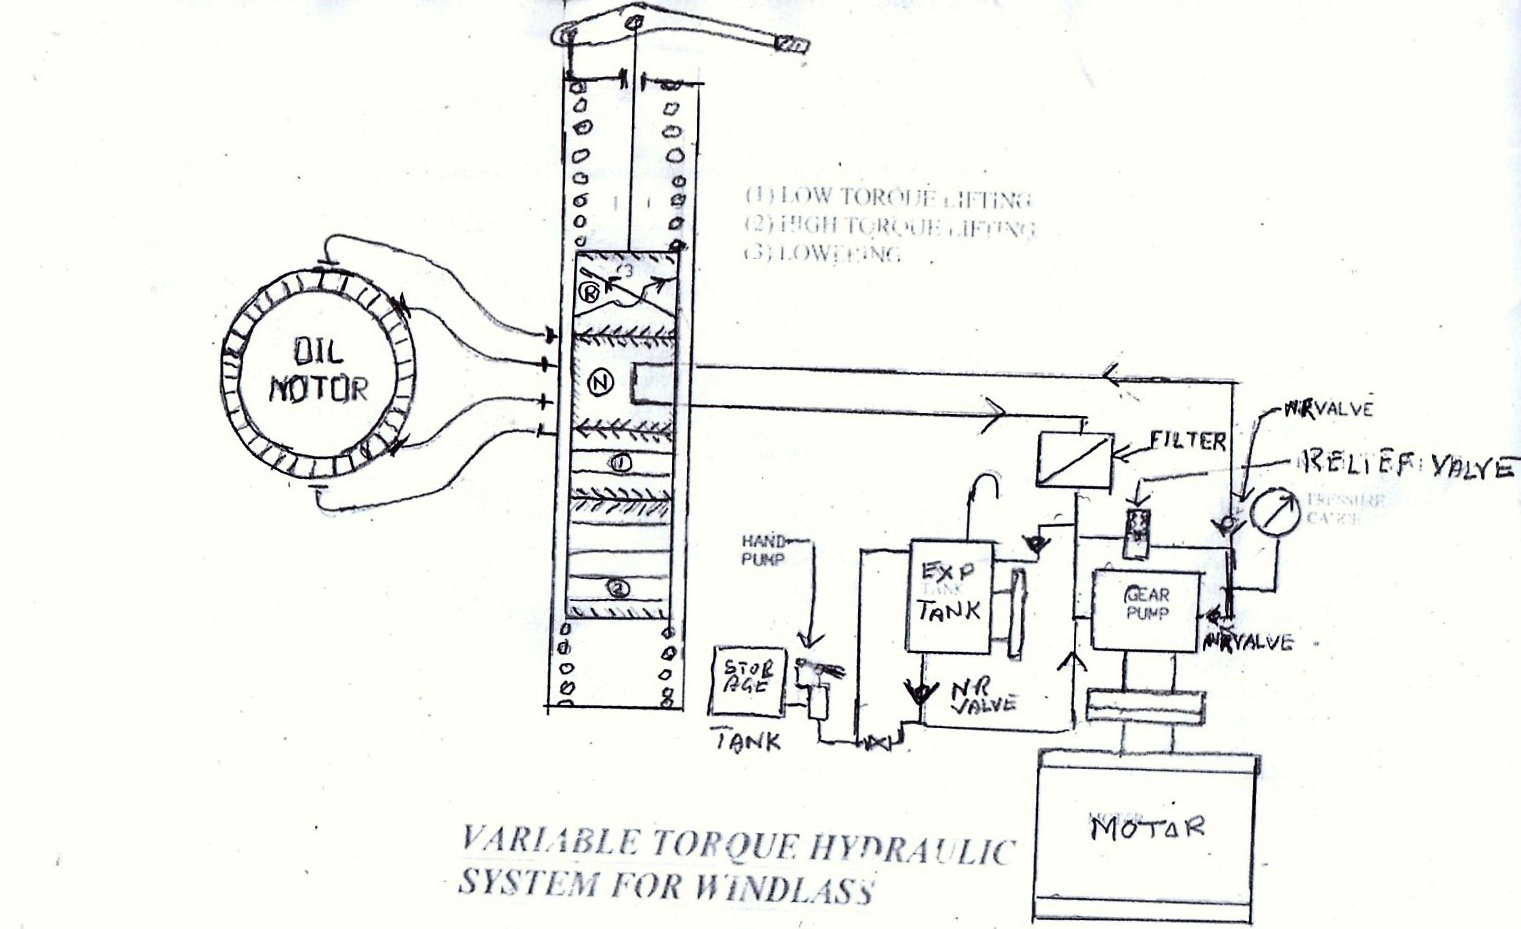 Variable torque hydraulic system for windlas